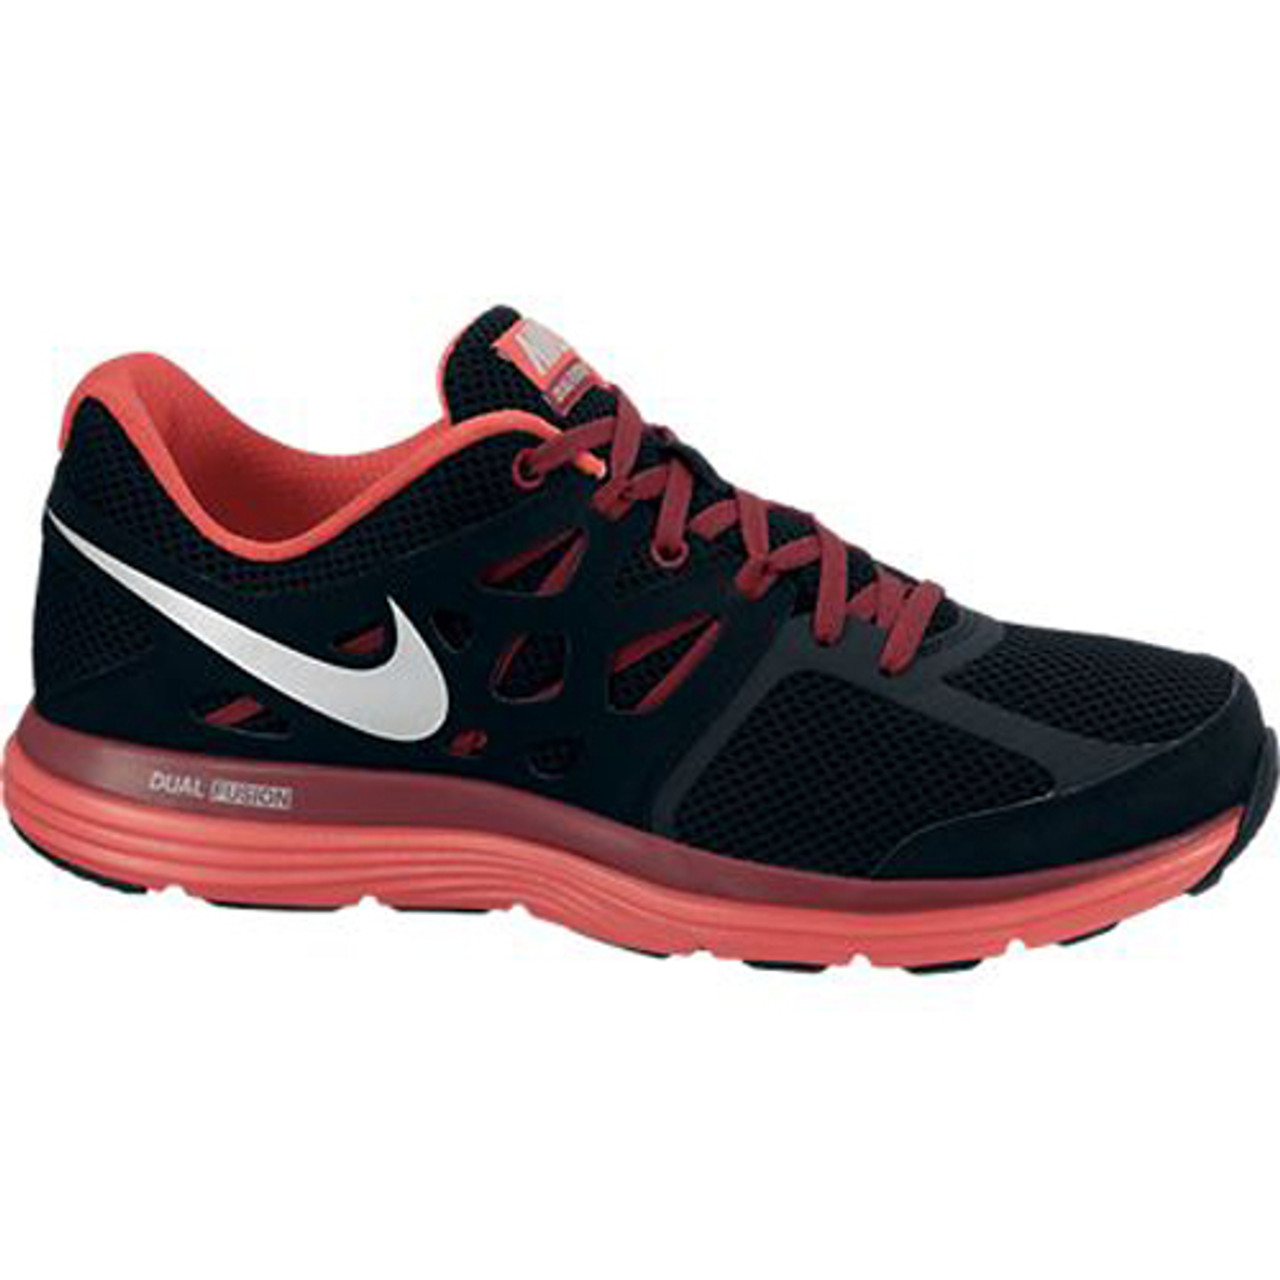 New Nike Dual Lite Black/Red Mens Running - Black/Team Red/Challenge | Discount Nike Men's Athletic & More - Shoolu.com Shoolu.com